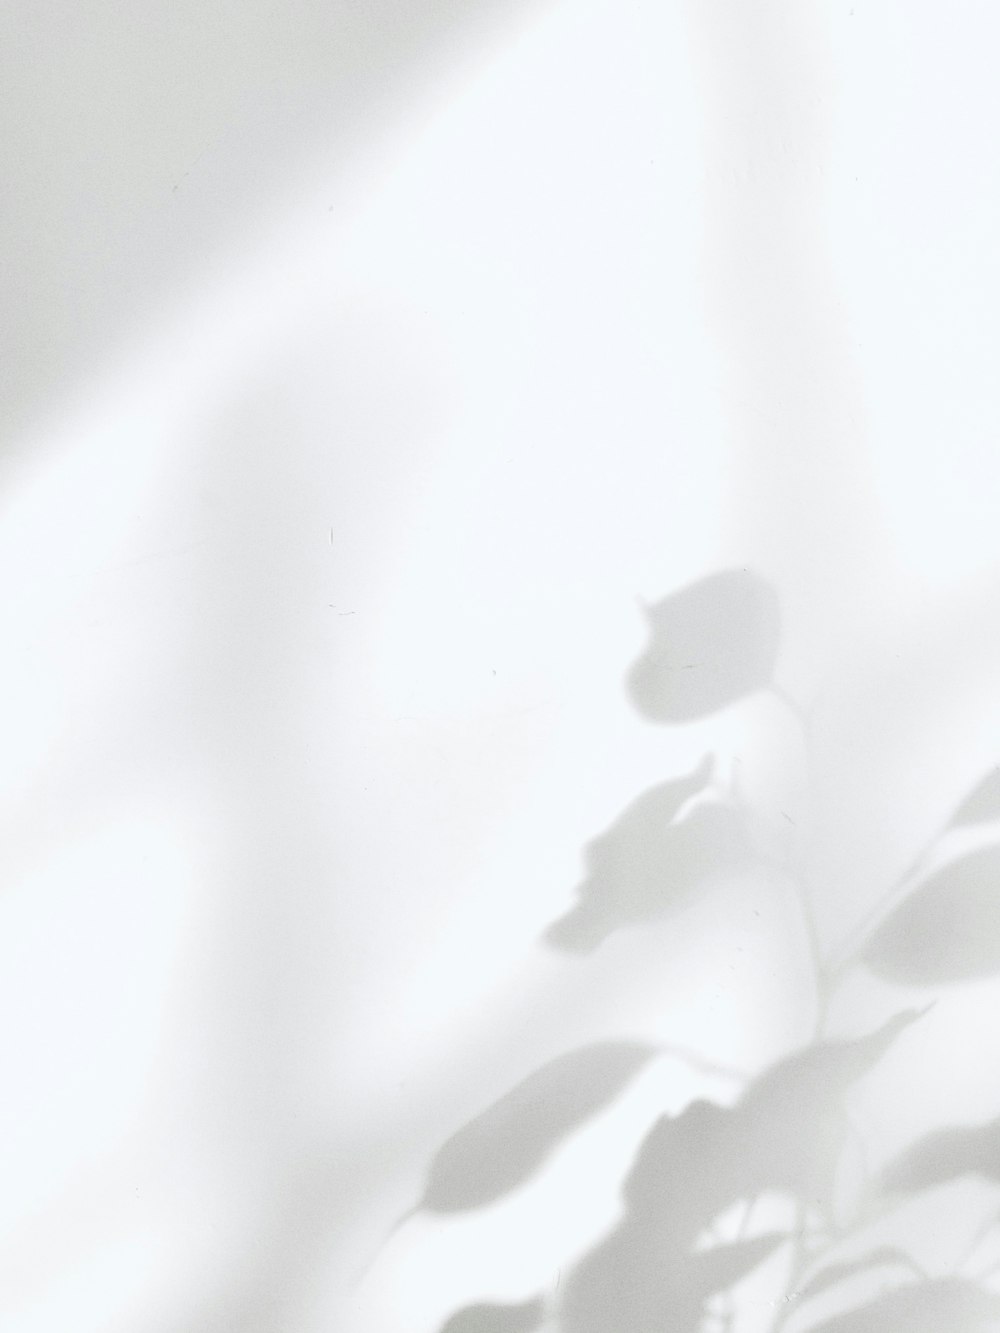 White Wallpapers: Free HD Download [500+ HQ] | Unsplash